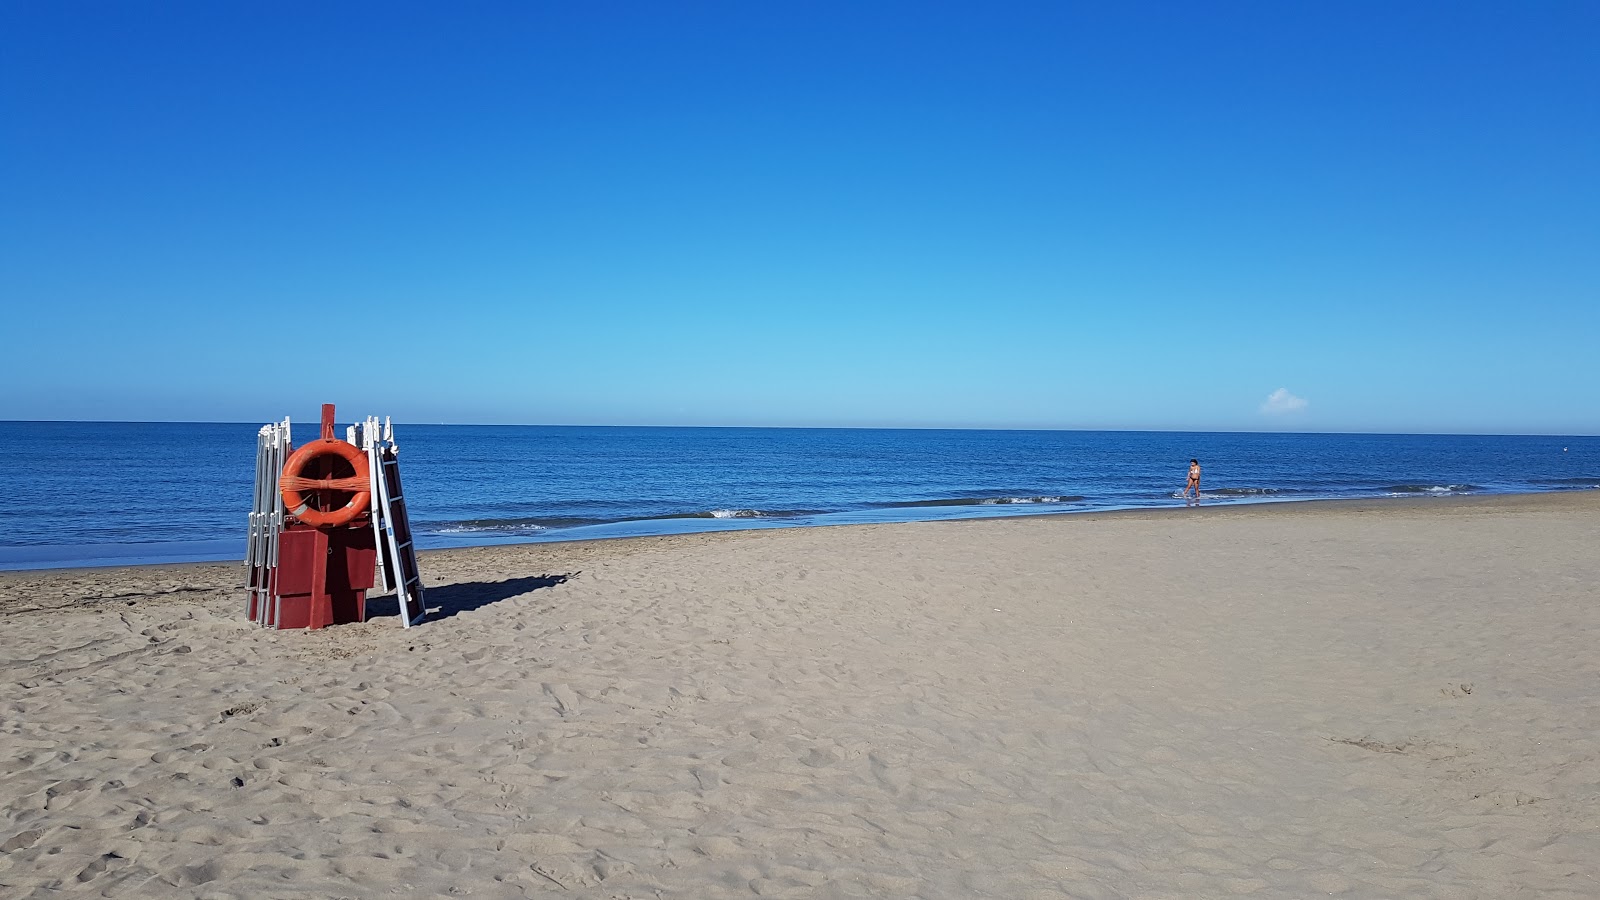 Foto av Spiaggia di Torvaianica med hög nivå av renlighet